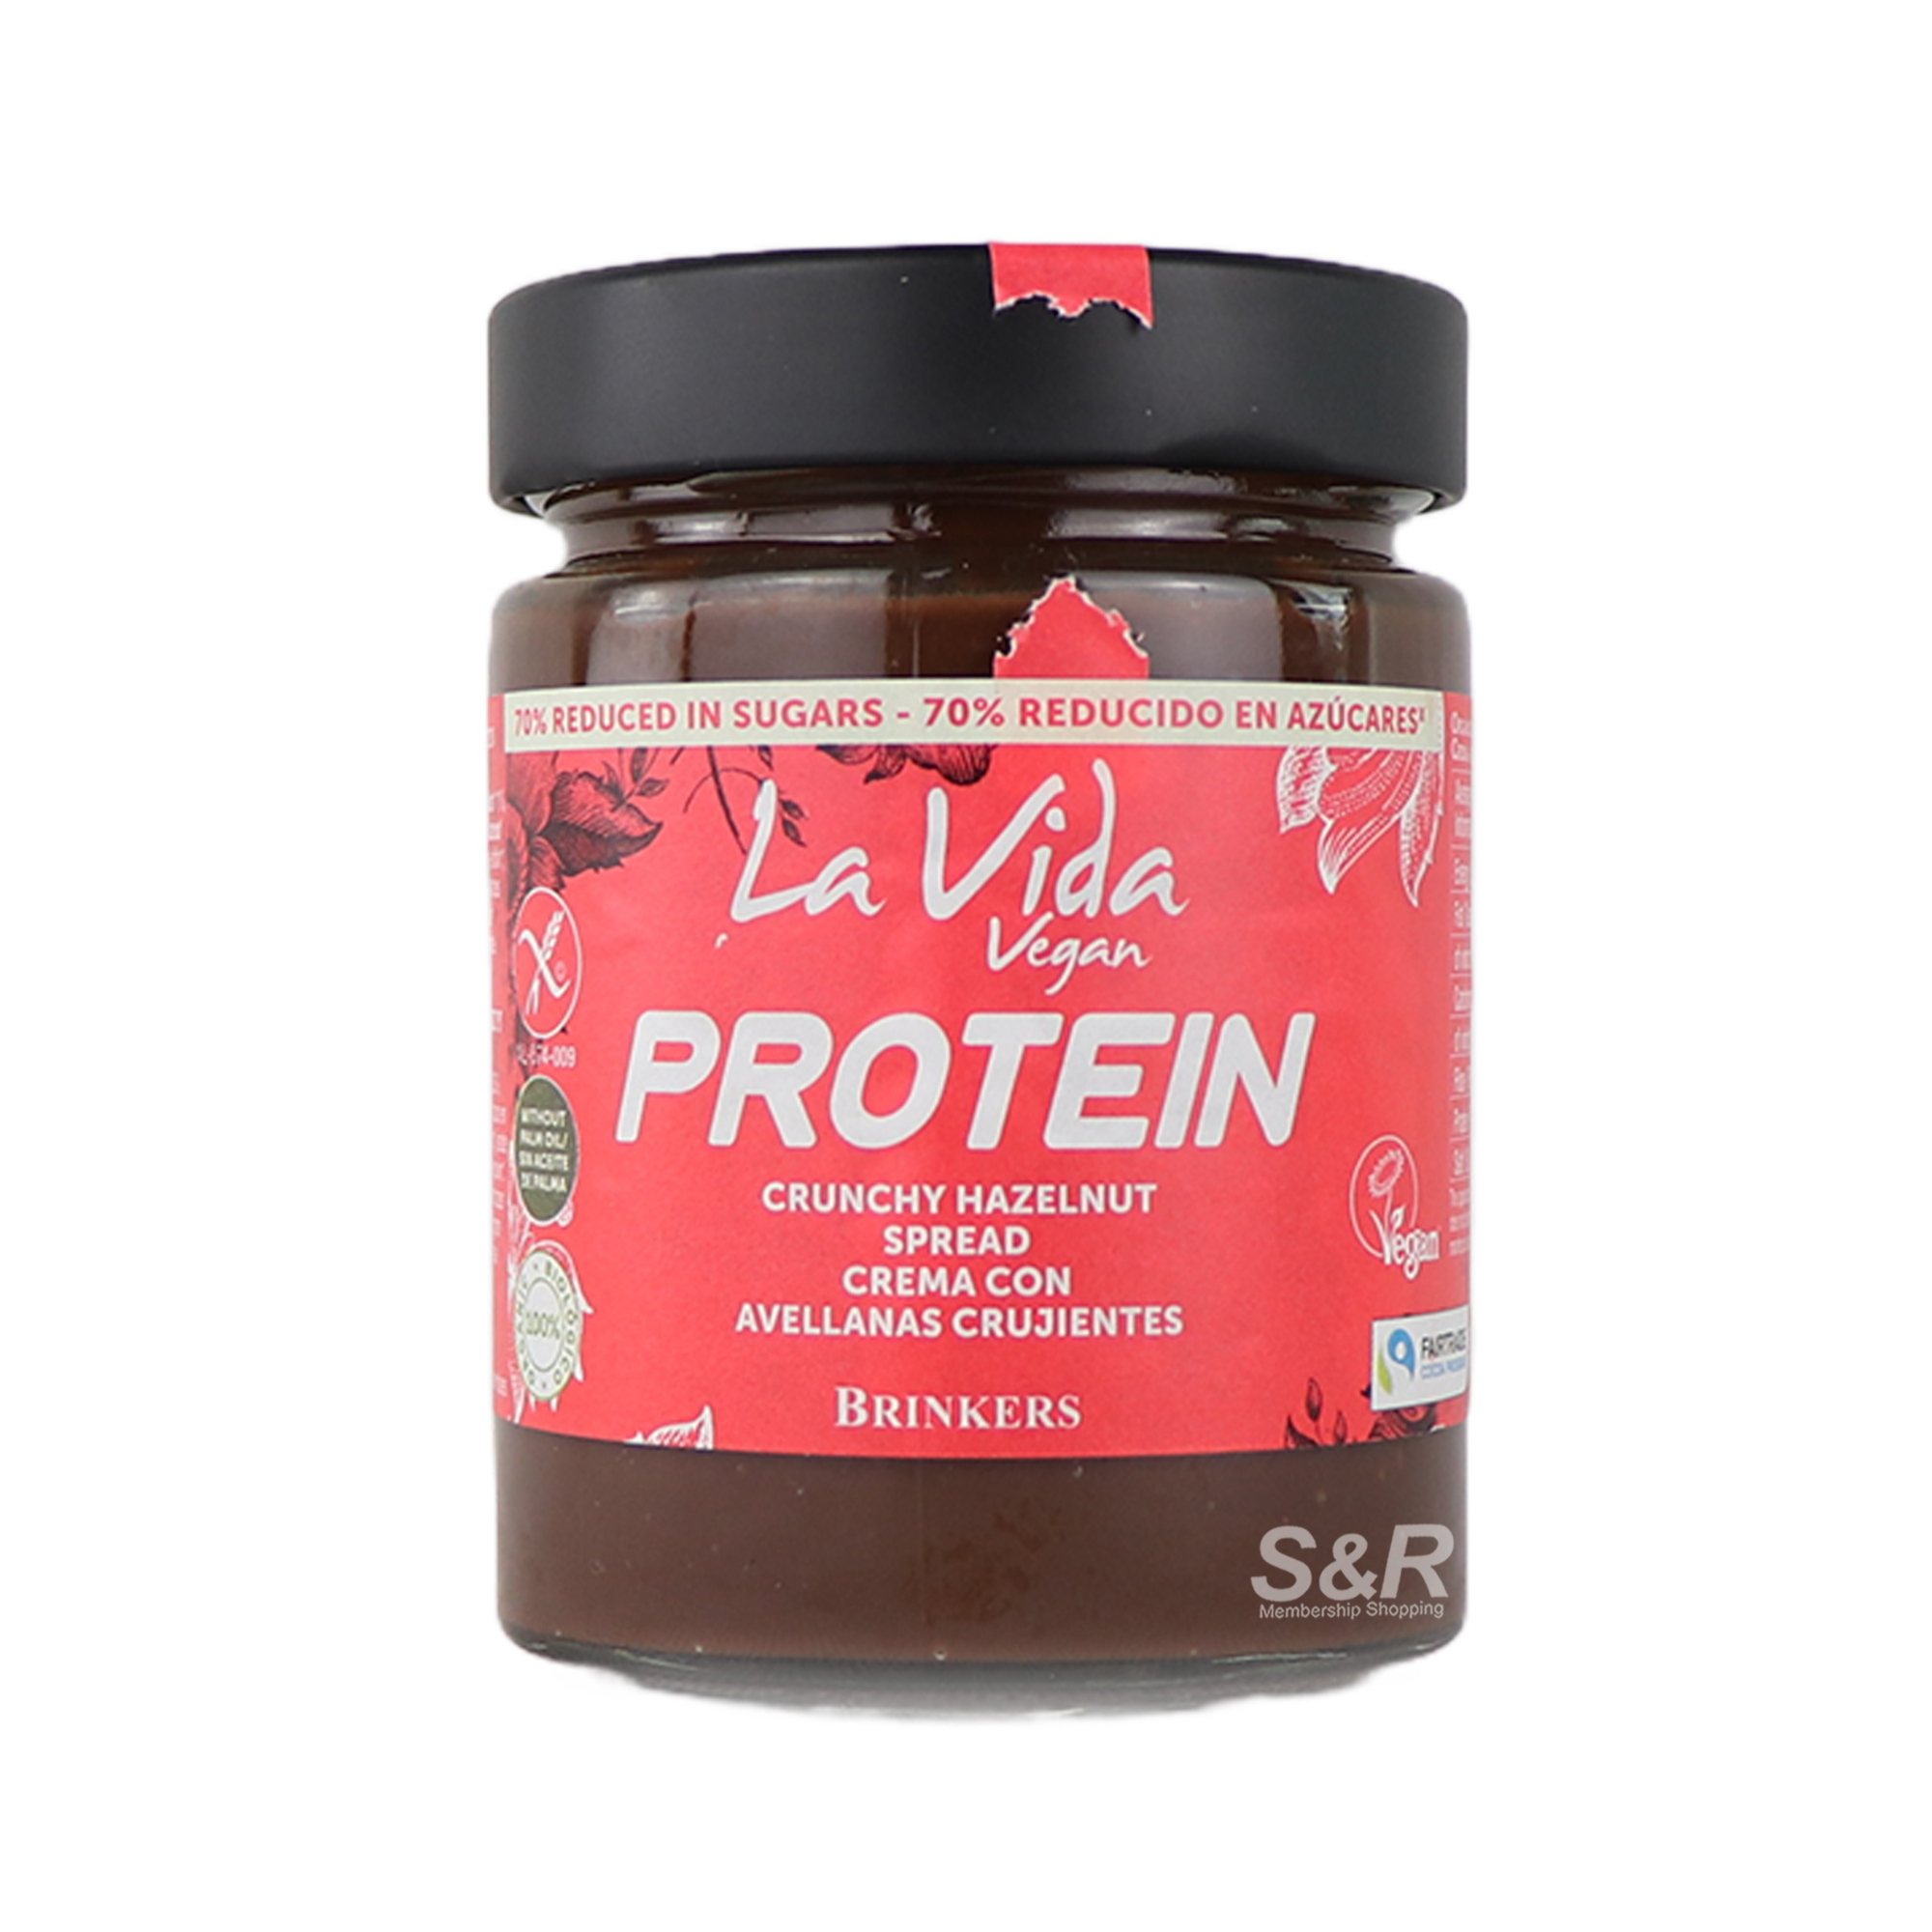 La Vida Vegan Protein Crunchy Hazelnut Spread 270g